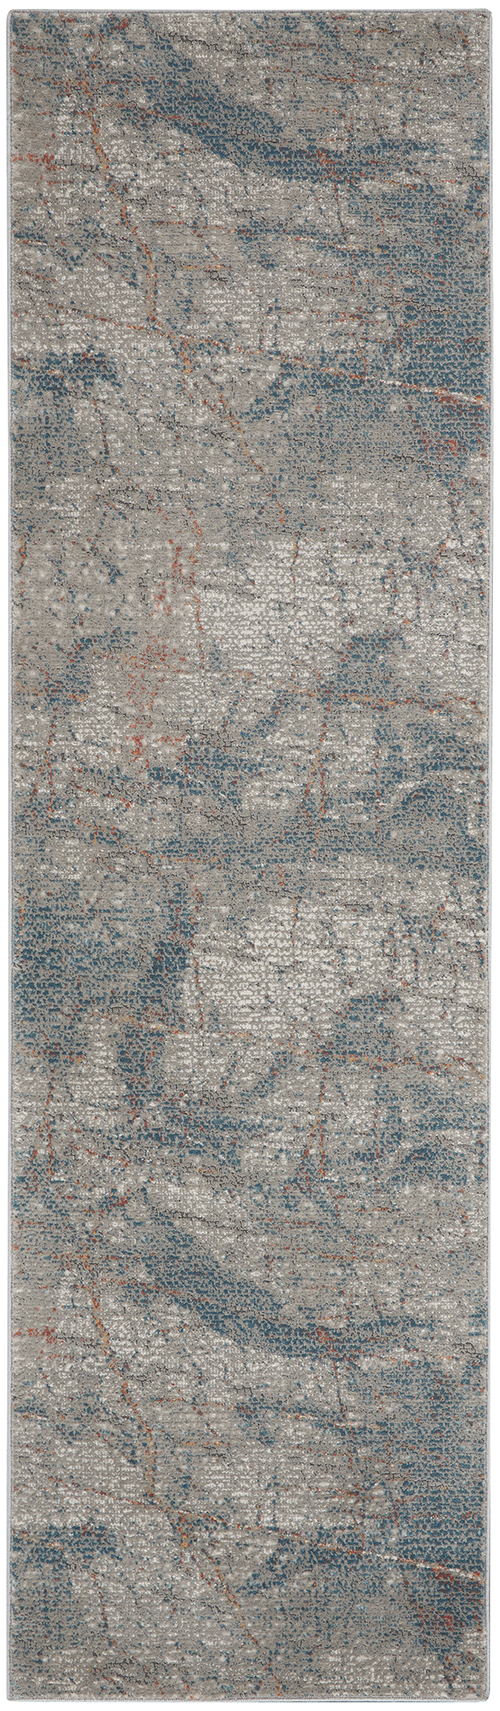 Nourison Rugs - Rustic Textures Runner RUS15 Rug in Grey / Blue - 2.3m x 0.66m